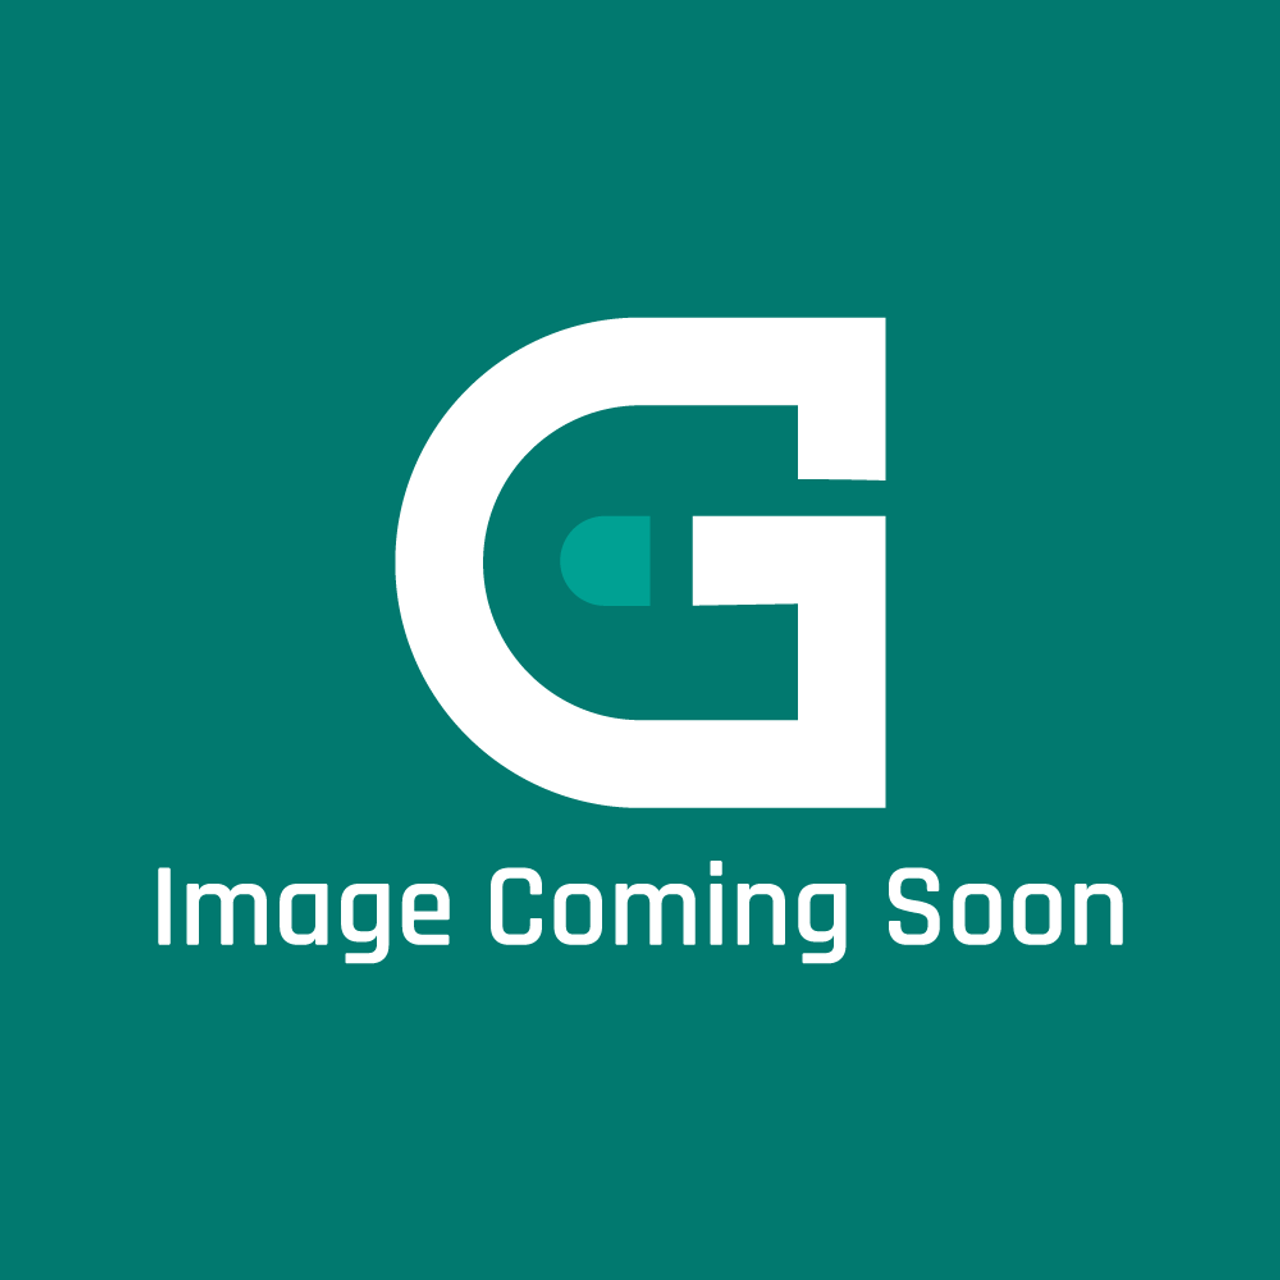 GE Appliances 23C20 - 107003-13 C0 Zp42K7E-Pfv R410A/230/1 - Image Coming Soon!